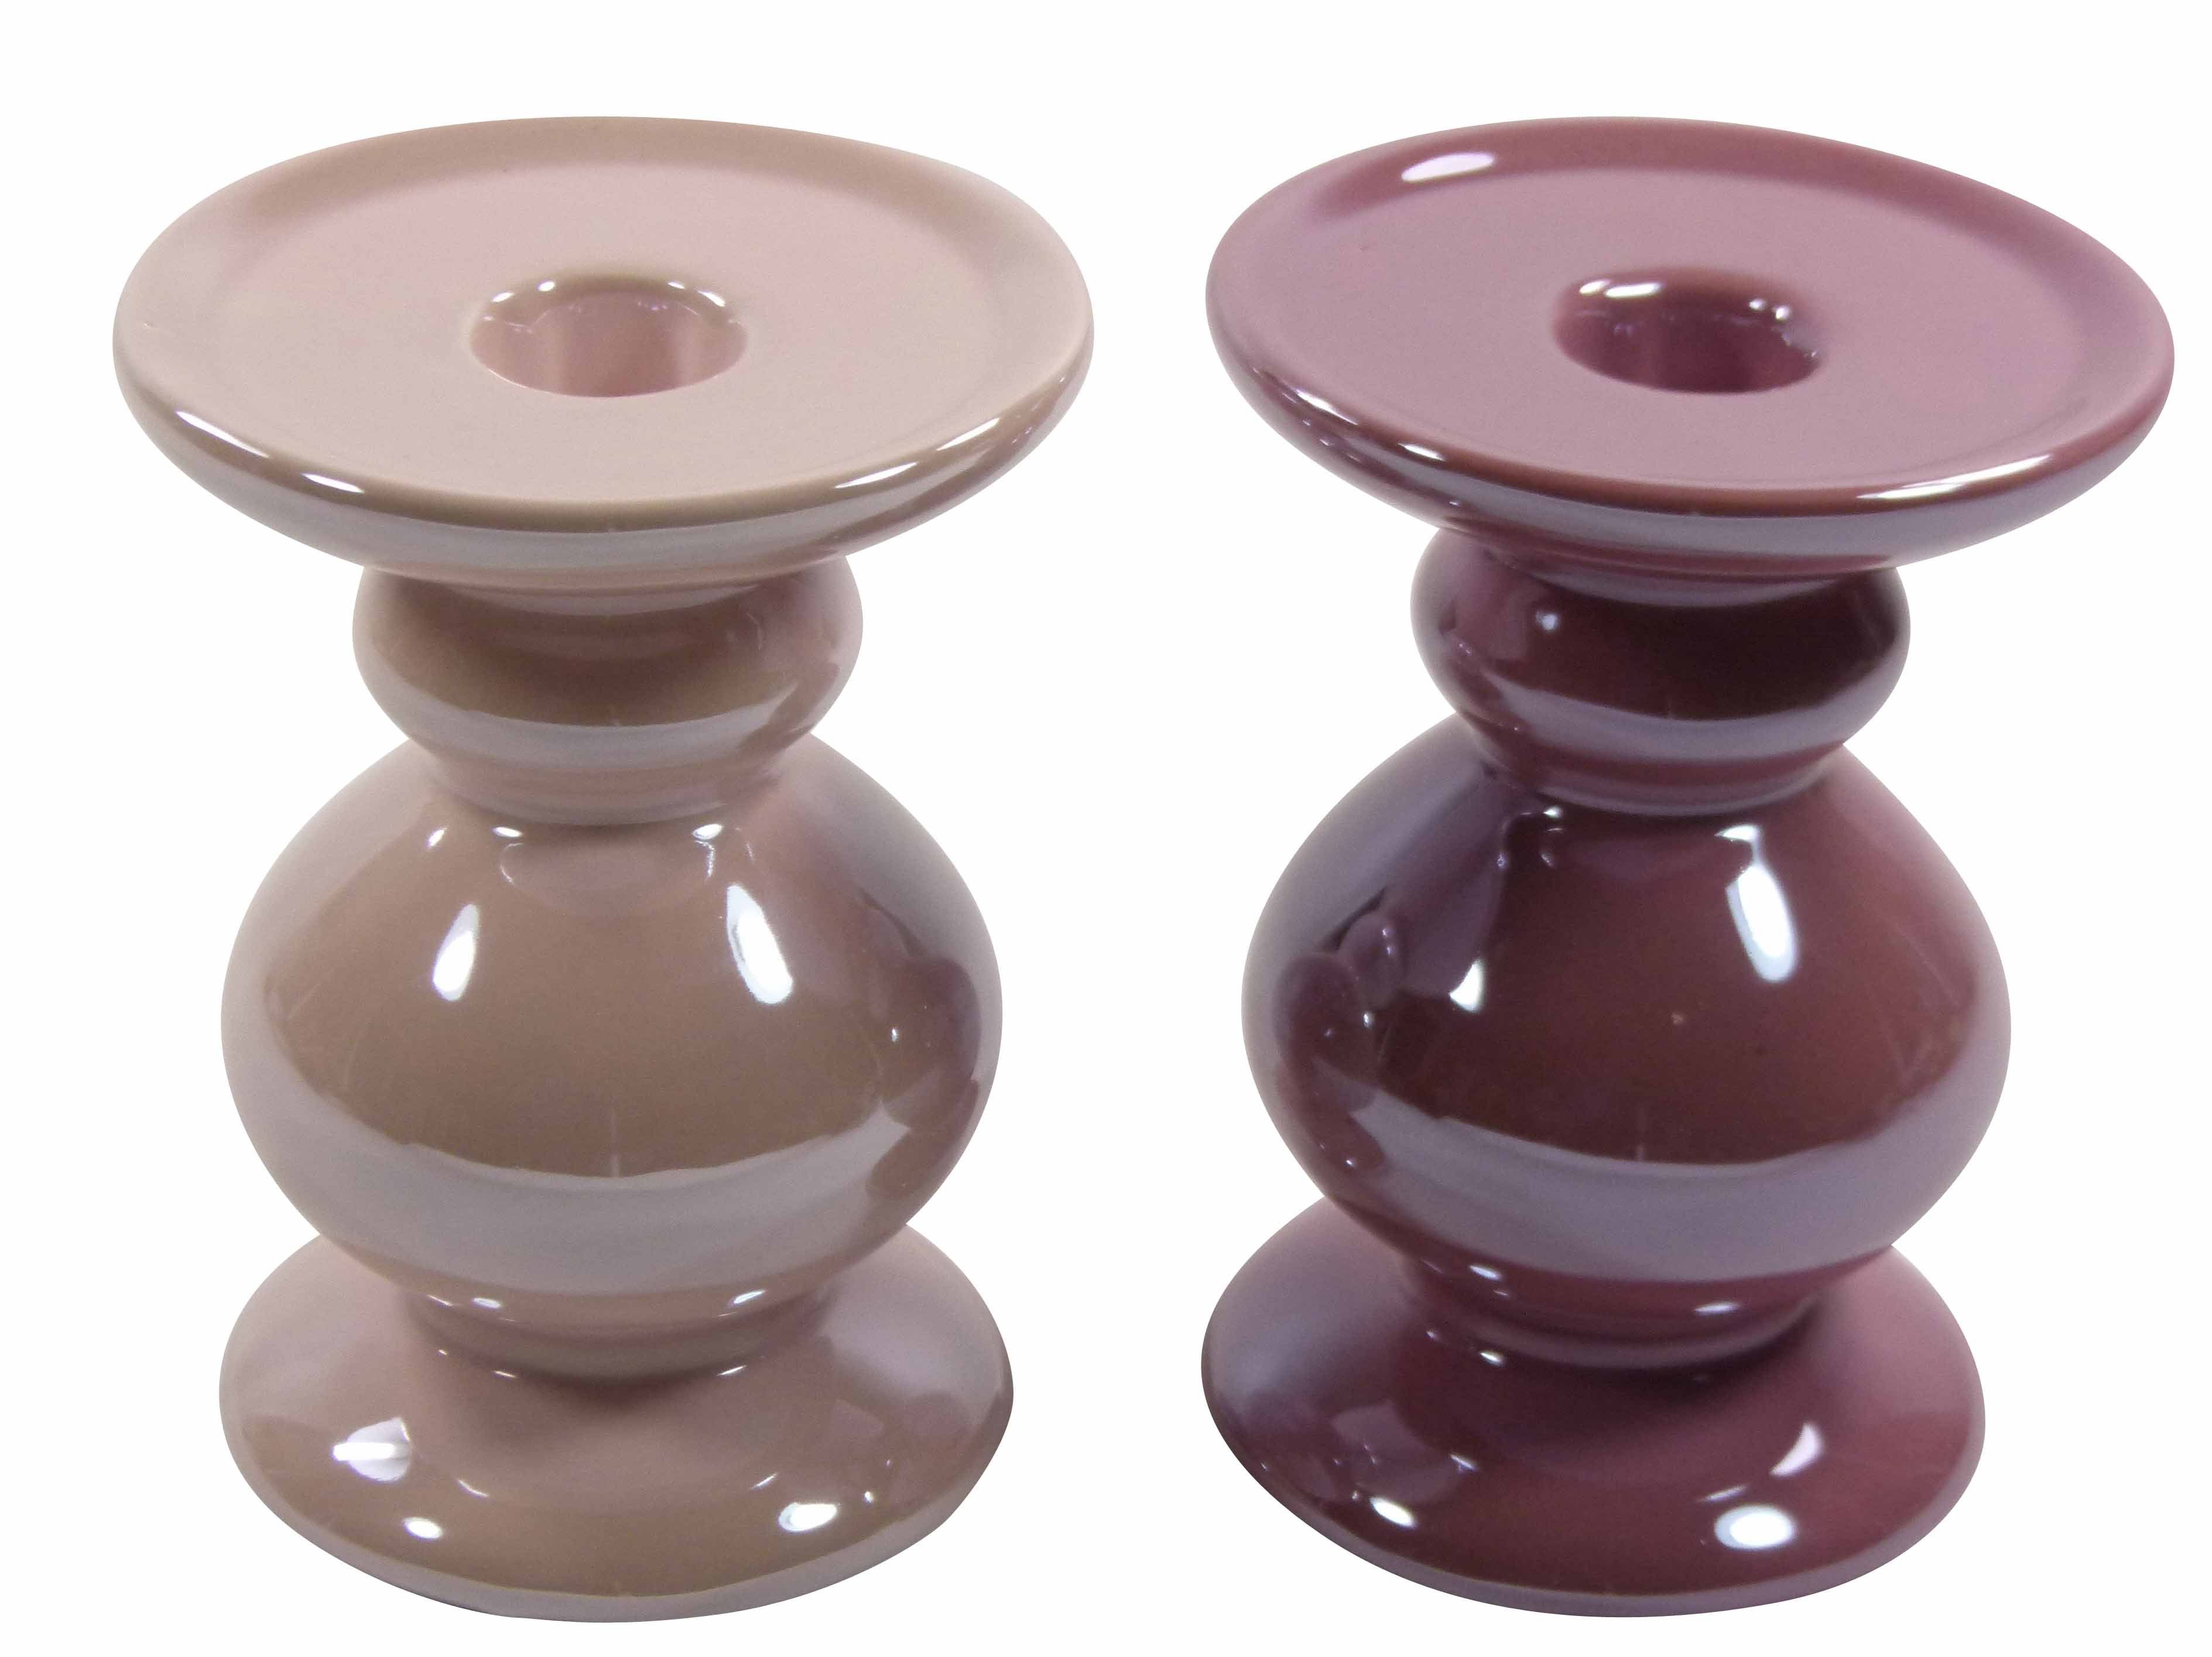 Sommer Keramik-Kerzenhalter 2er-Set), St., zwei und GlasArt SET dunkelrosa, 2 Kerzenhalter (Dekoset, Größen 12cm-20cm, Aus Keramik Frühling 2er Säulenform hell-